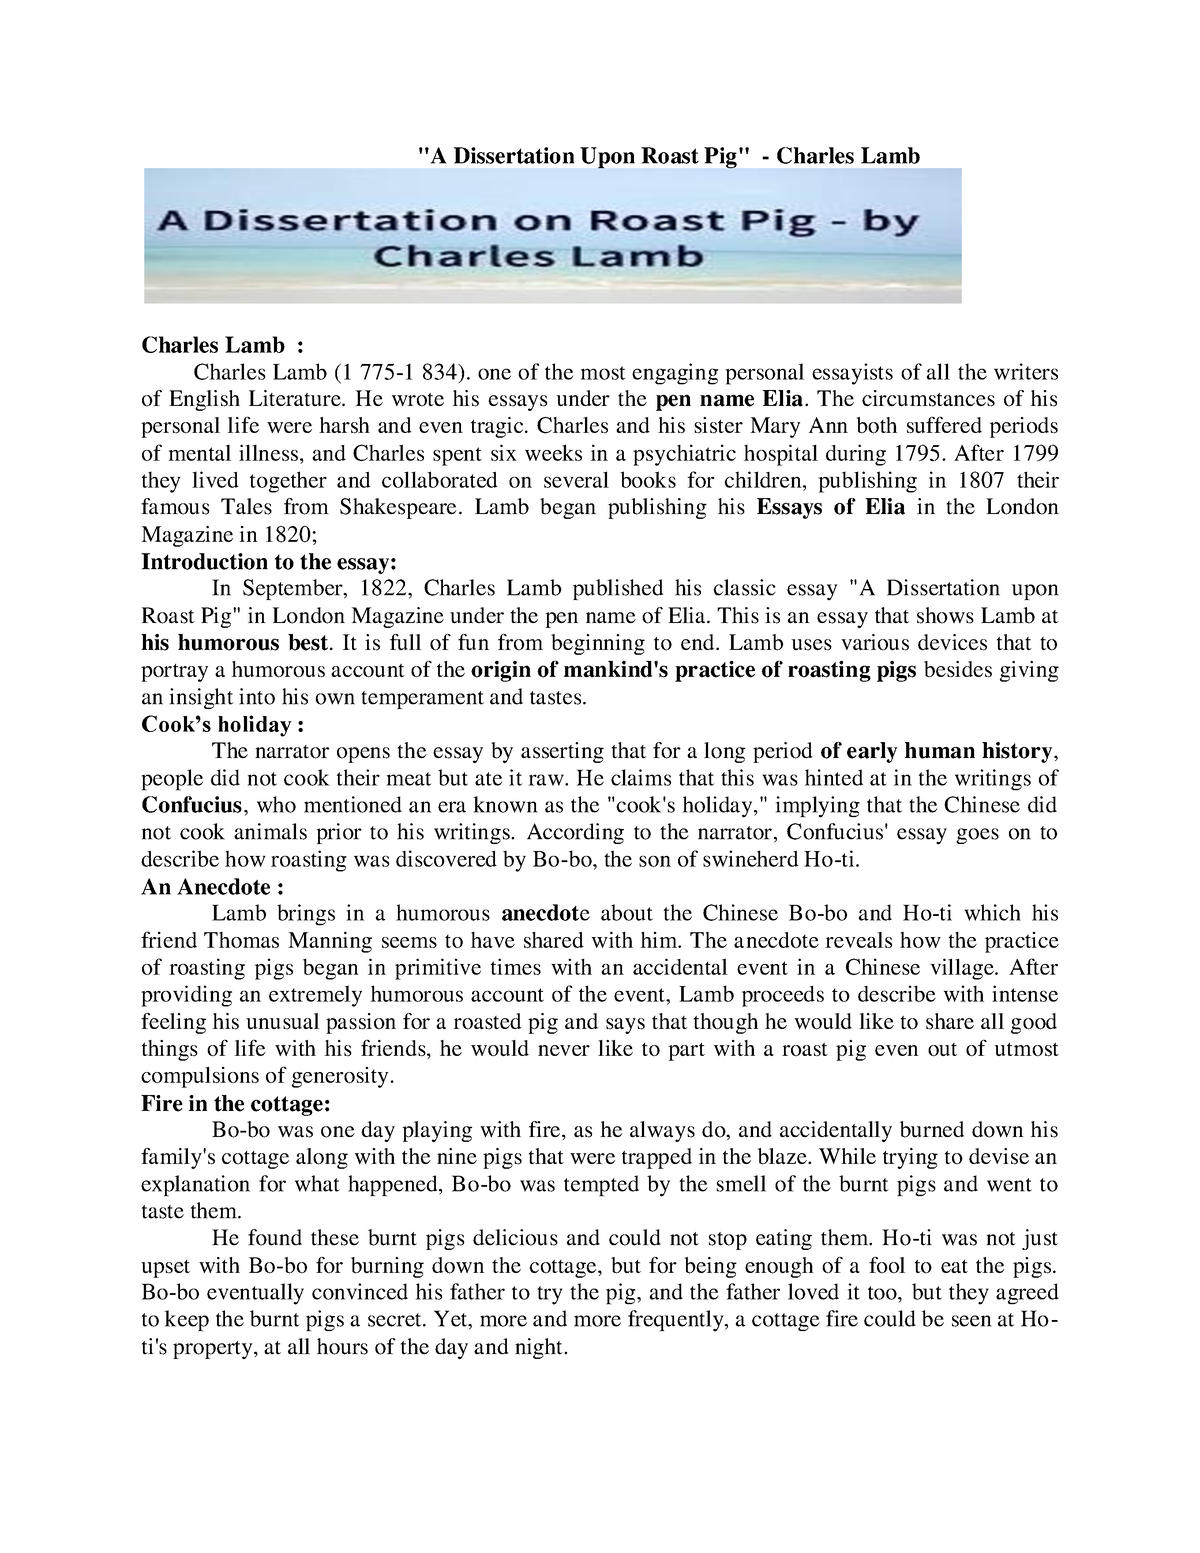 explain the theme of the essay a dissertation upon roast pig